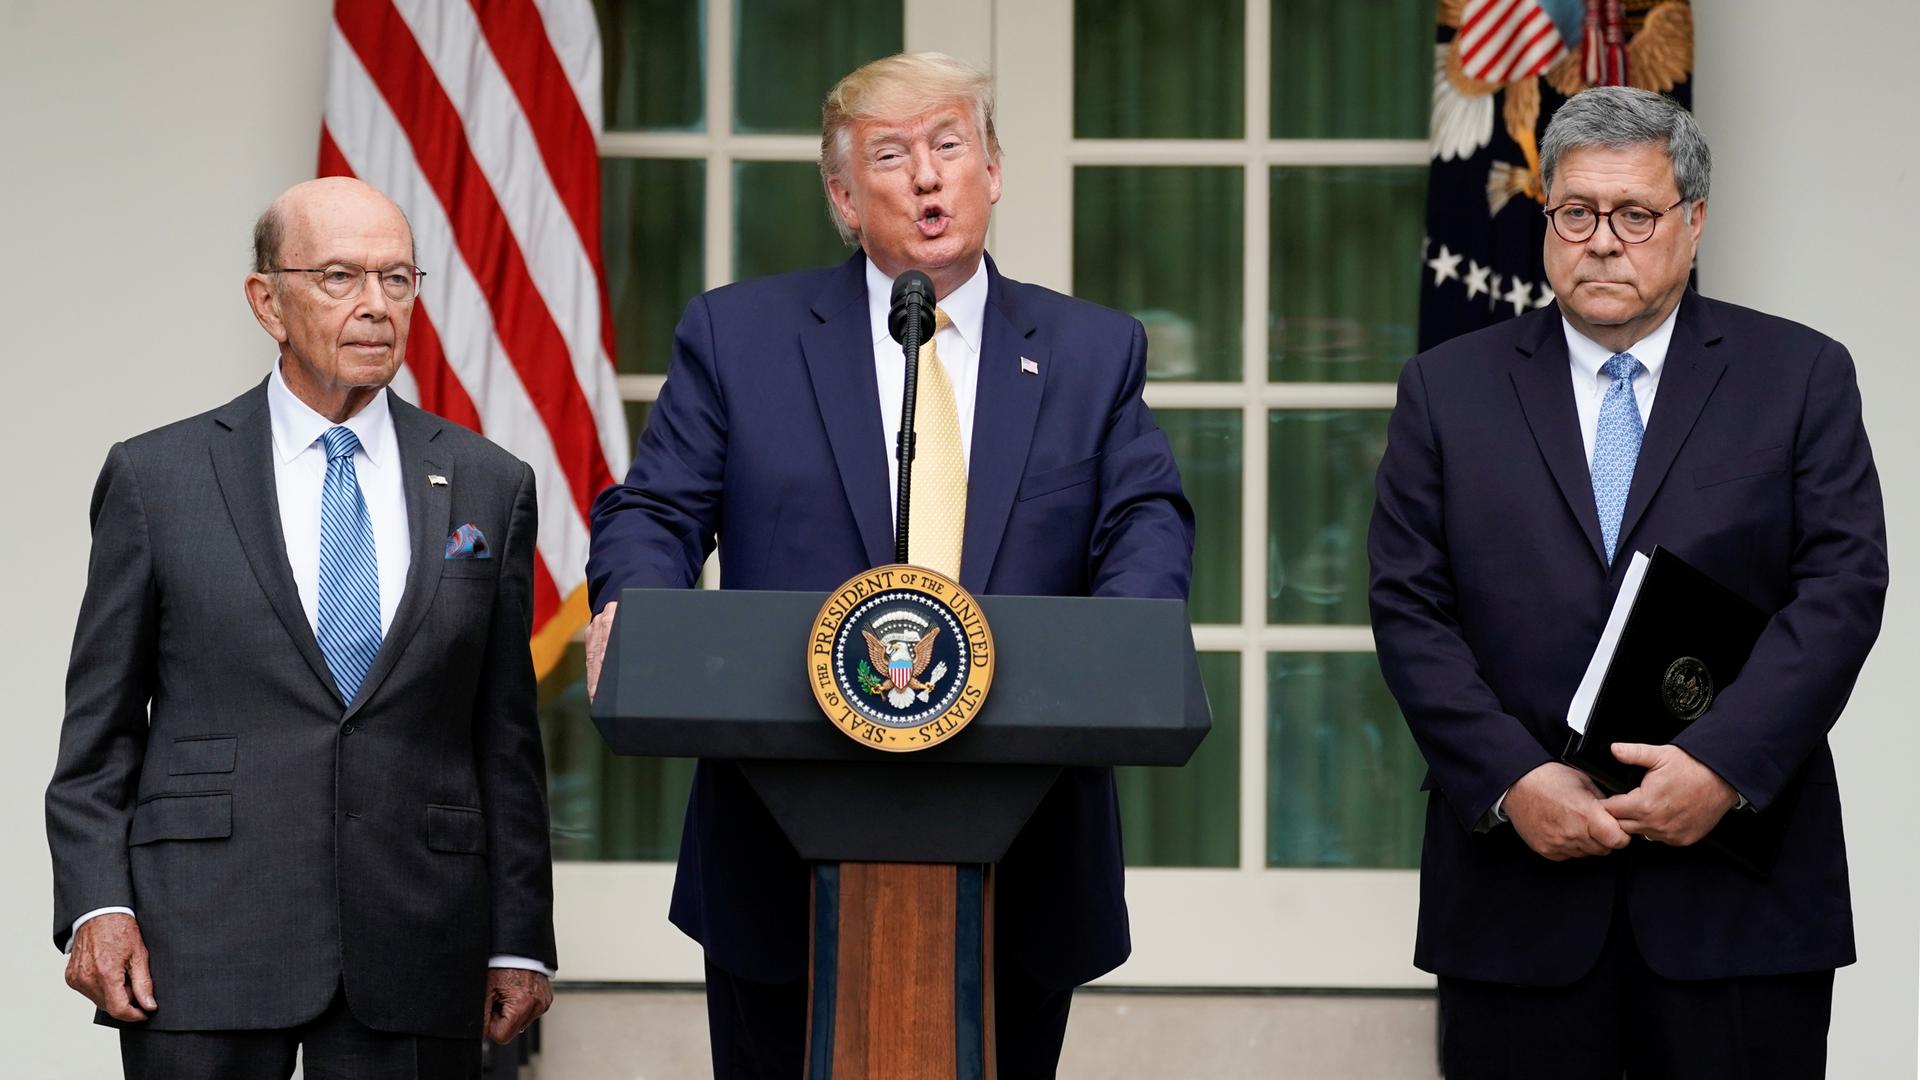 President Trump speaks at a podium